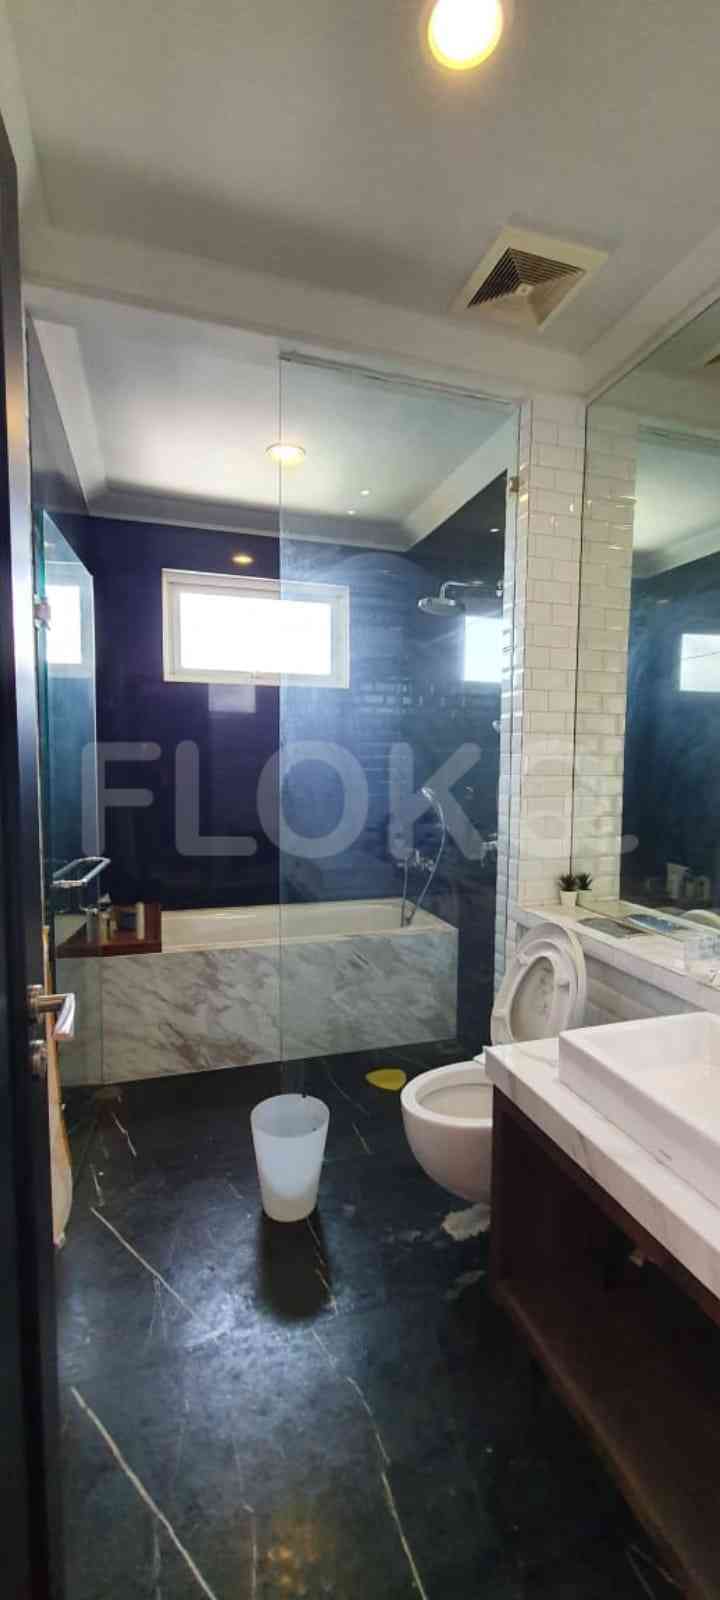 4 Bedroom on 10th Floor for Rent in Pondok Indah Residence - fpoa5c 9